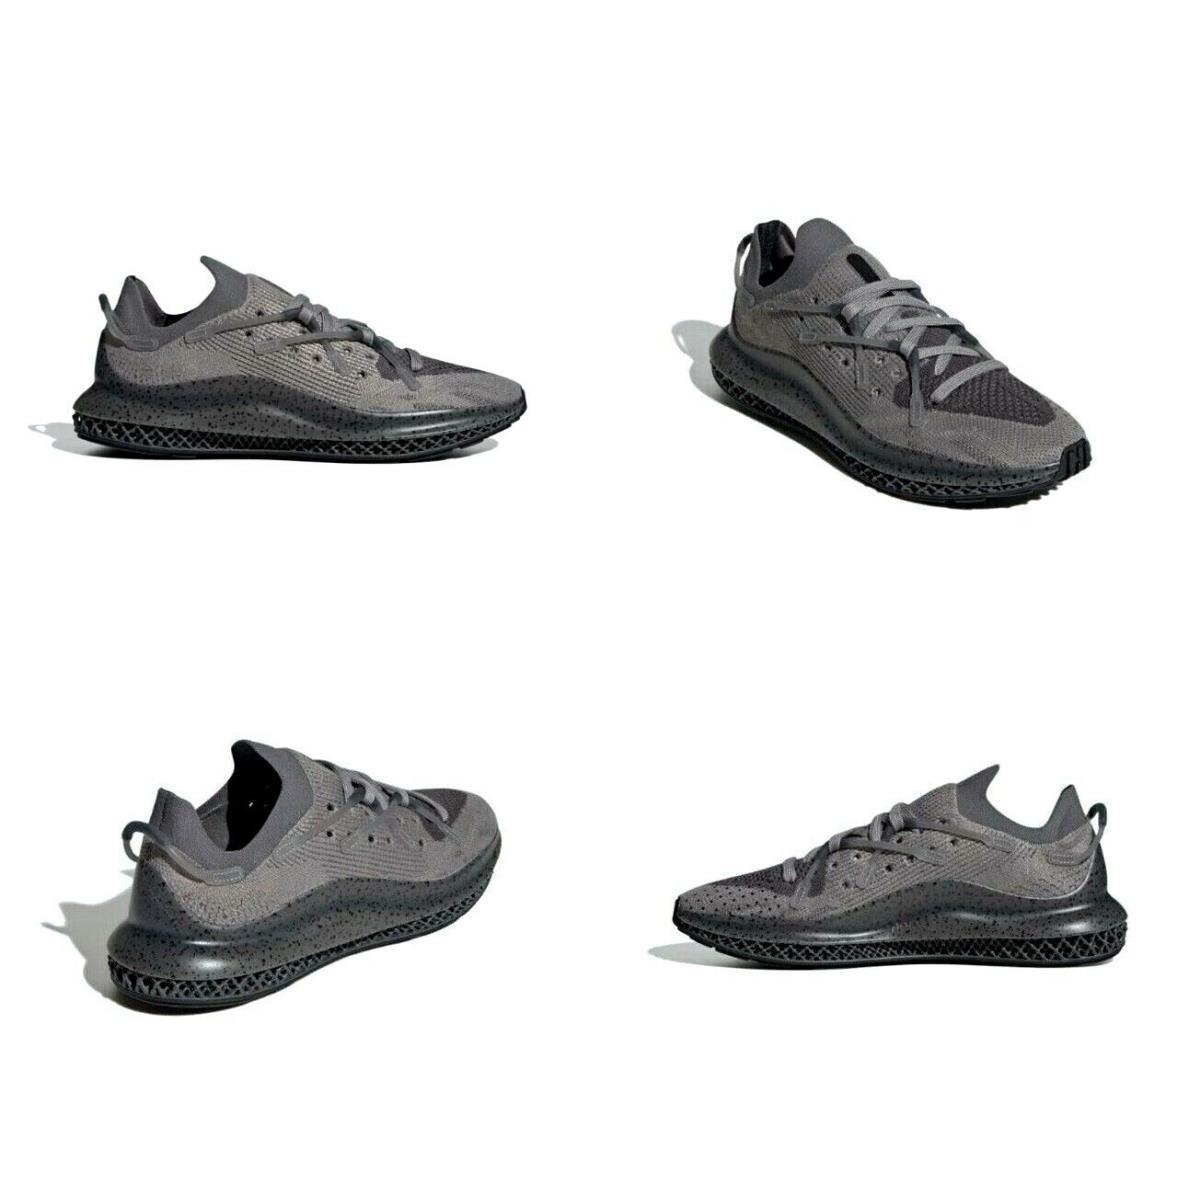 Adidas Originals 4D Fusio Grey Black Running Shoes Mens Size 9 US H04507